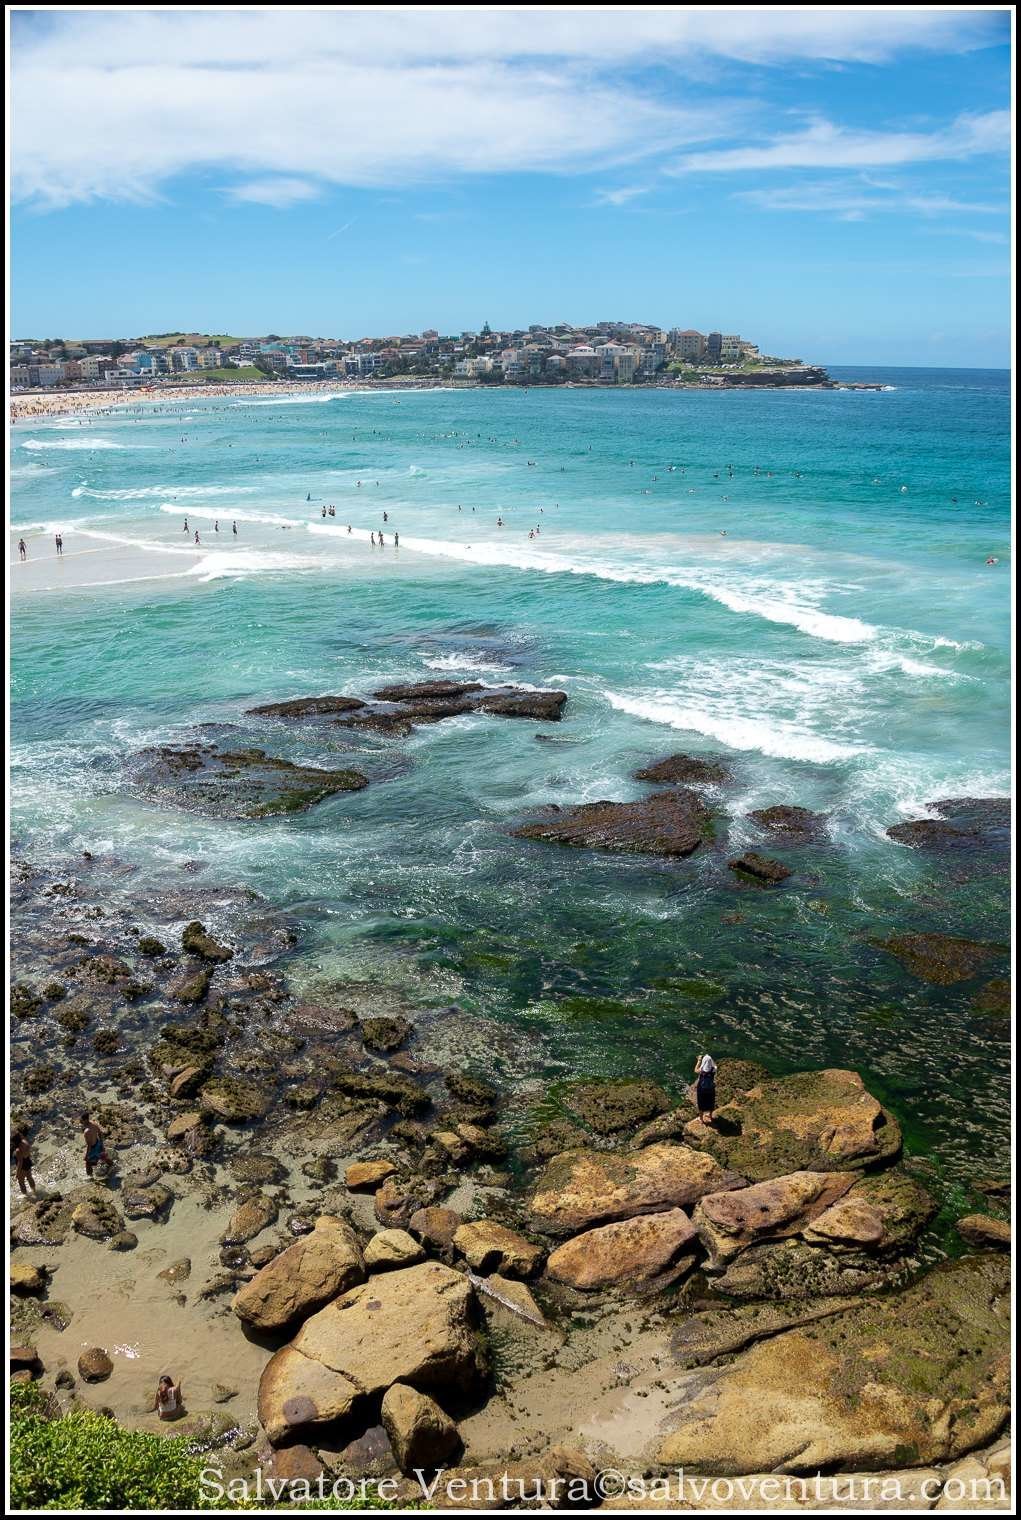 2016.03.05 Sydney Bondi to Coogee coastal hike-salvoventura-blog-DSC_6781